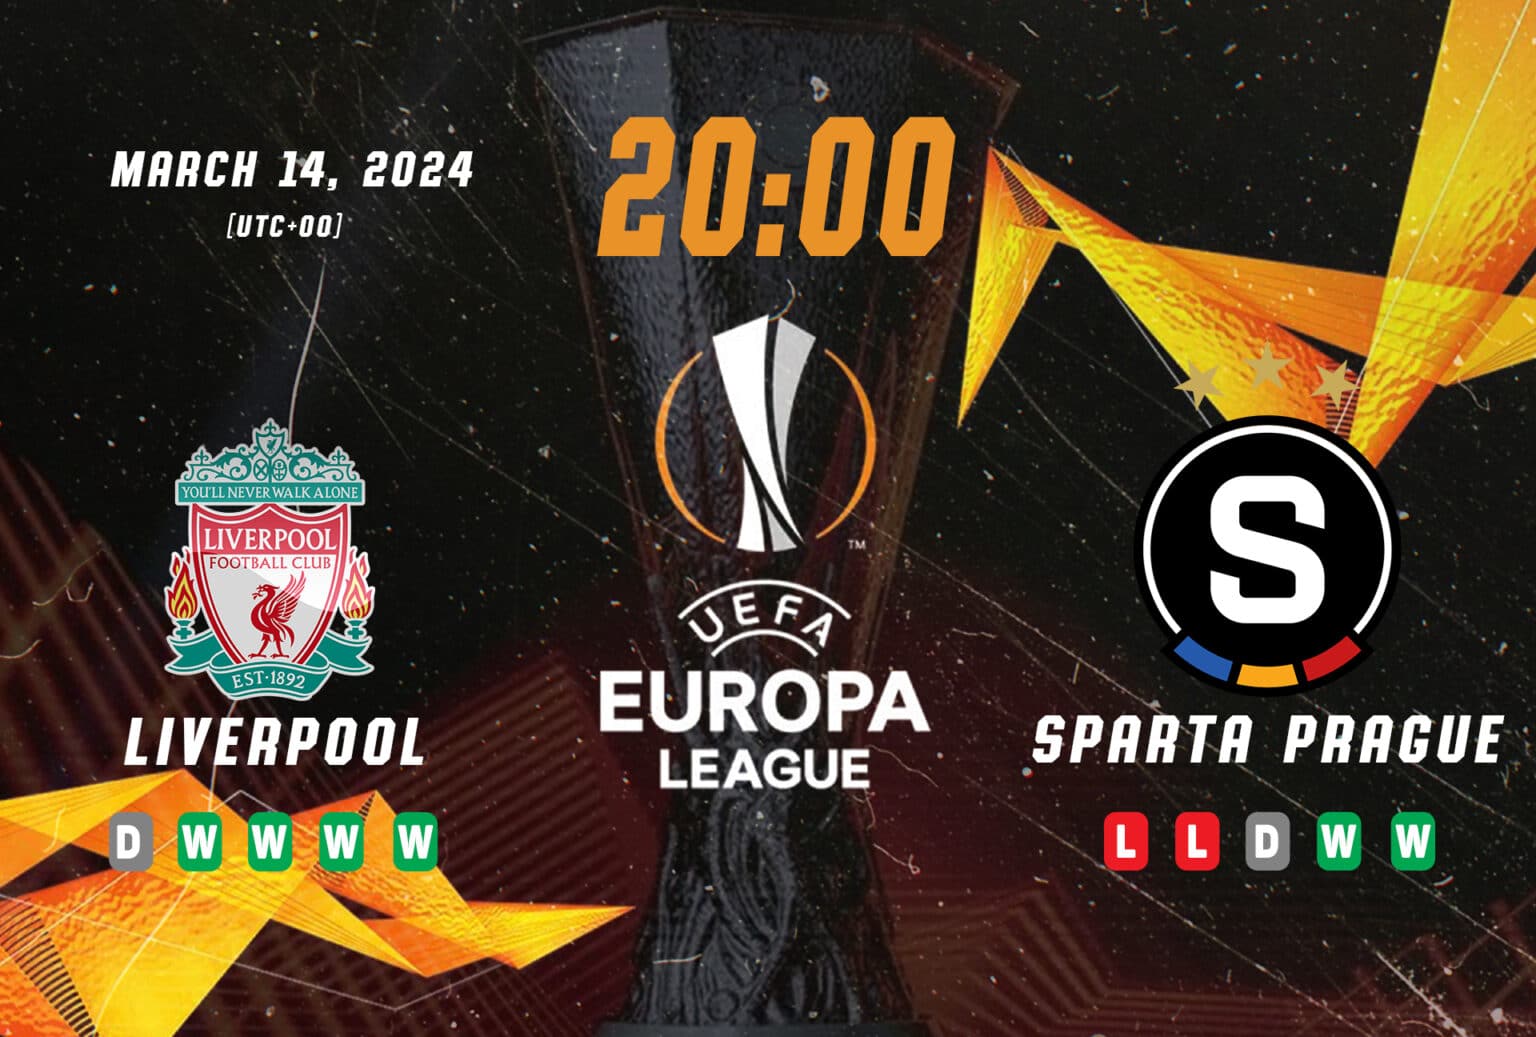 Aperçu de la Ligue Europa Liverpool vs Sparta Prague